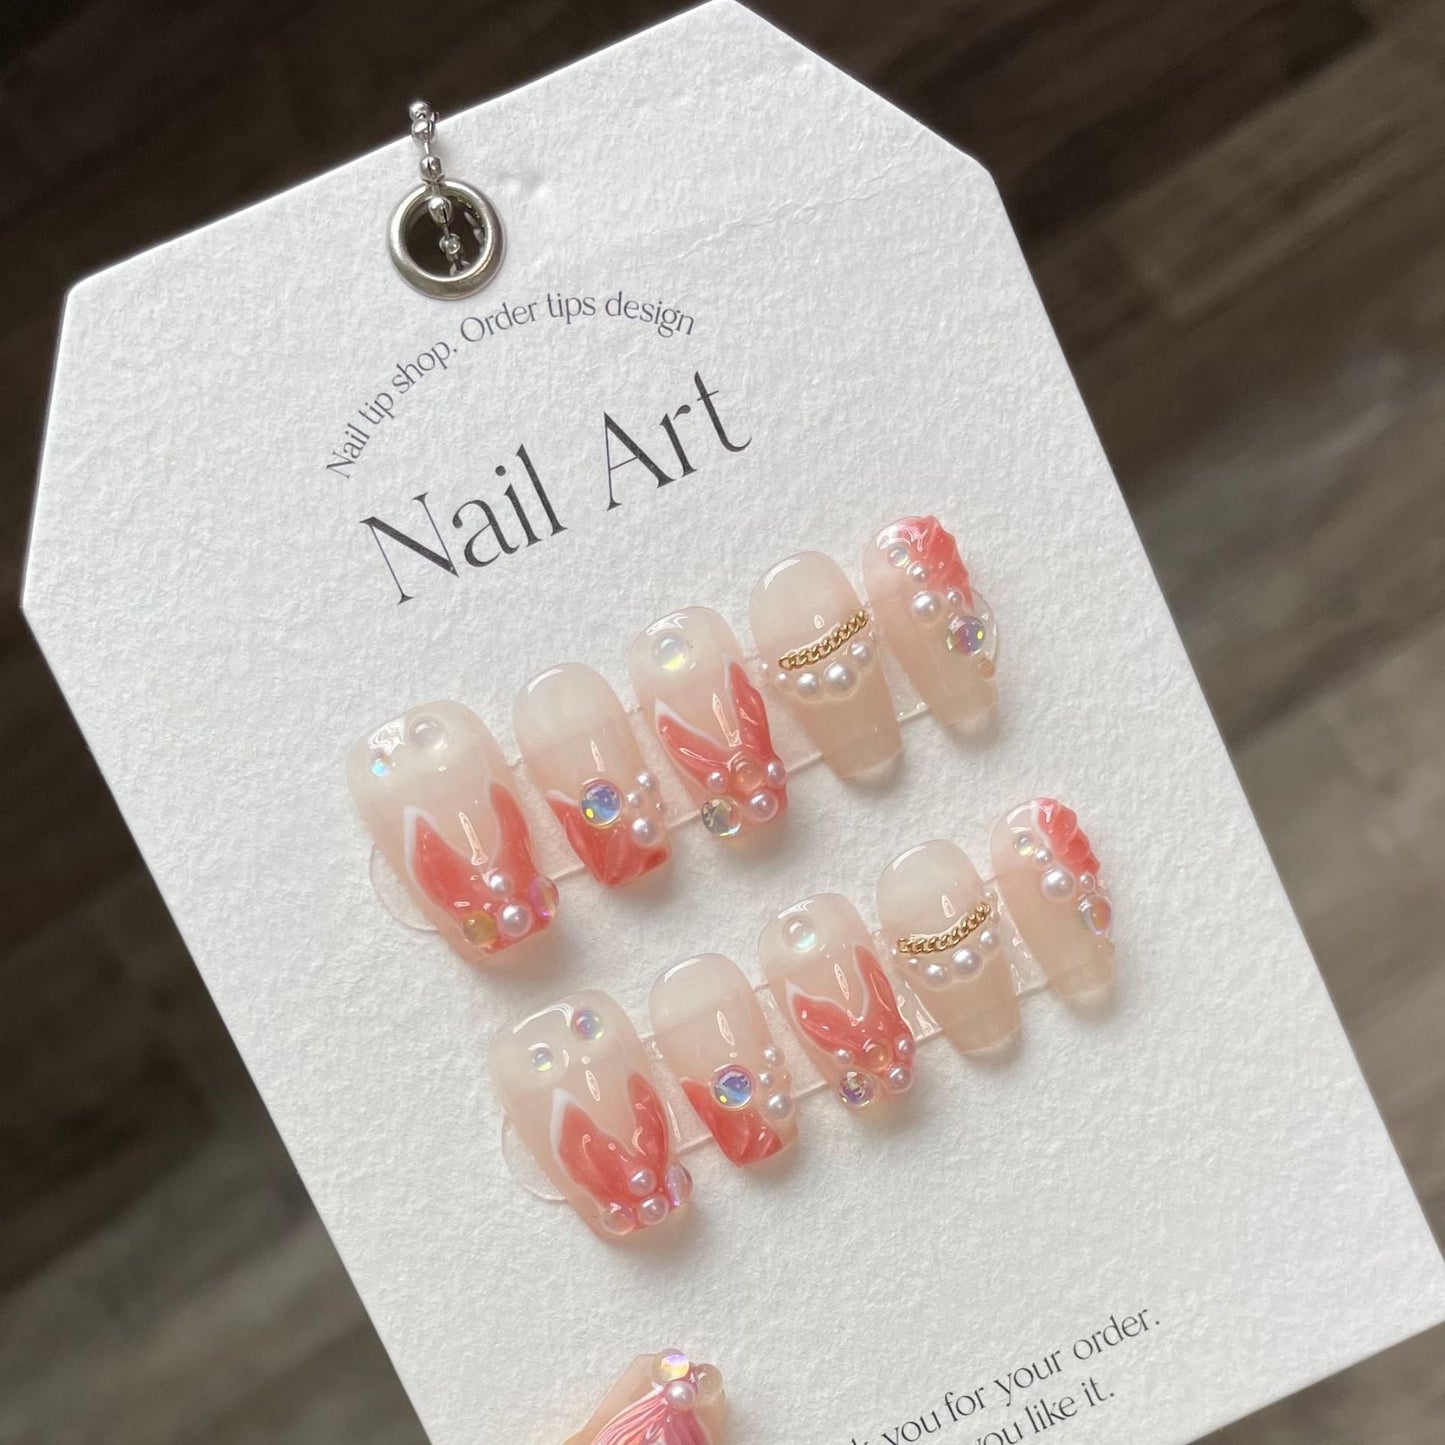 900/905 Cute Pearl mermaid style press on nails 100% handmade false nails pink nude color